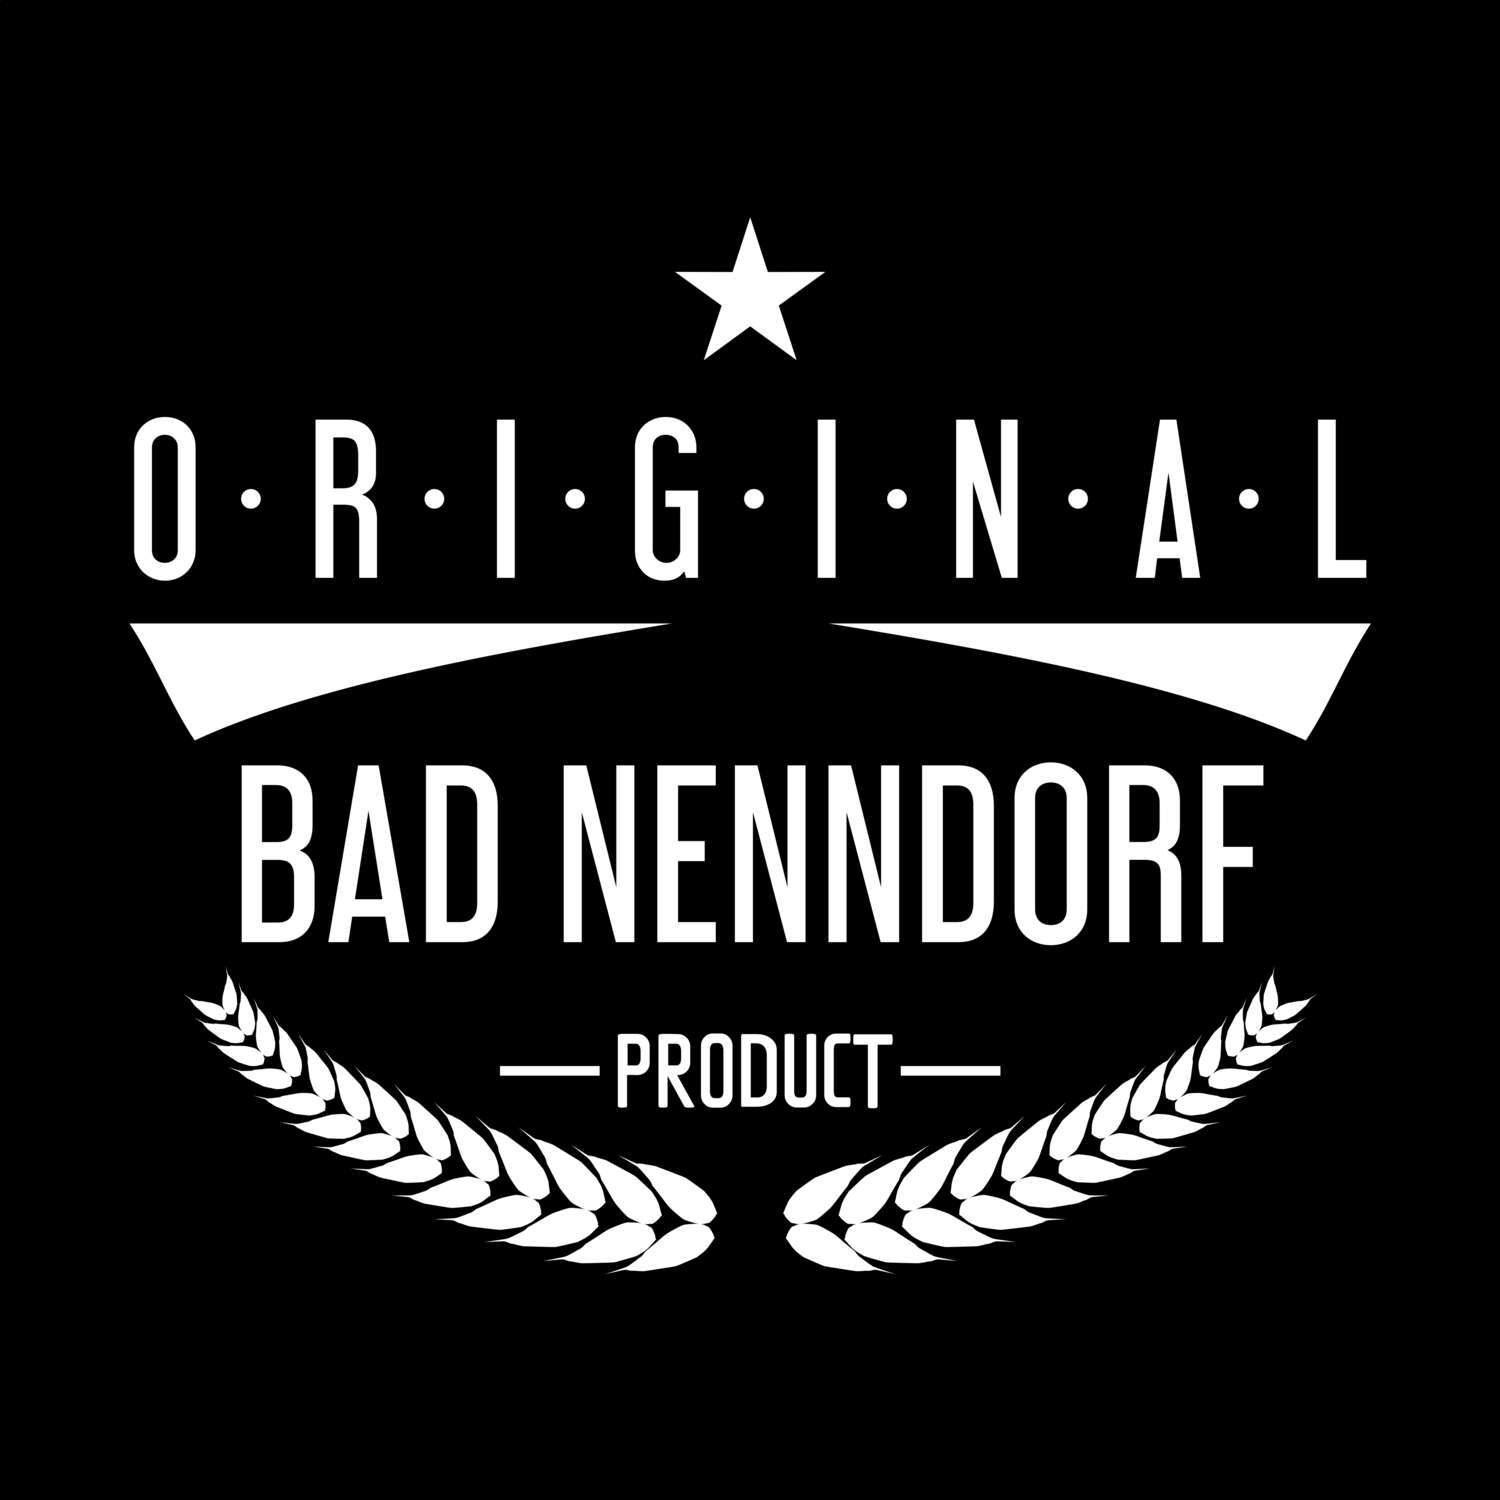 Bad Nenndorf T-Shirt »Original Product«